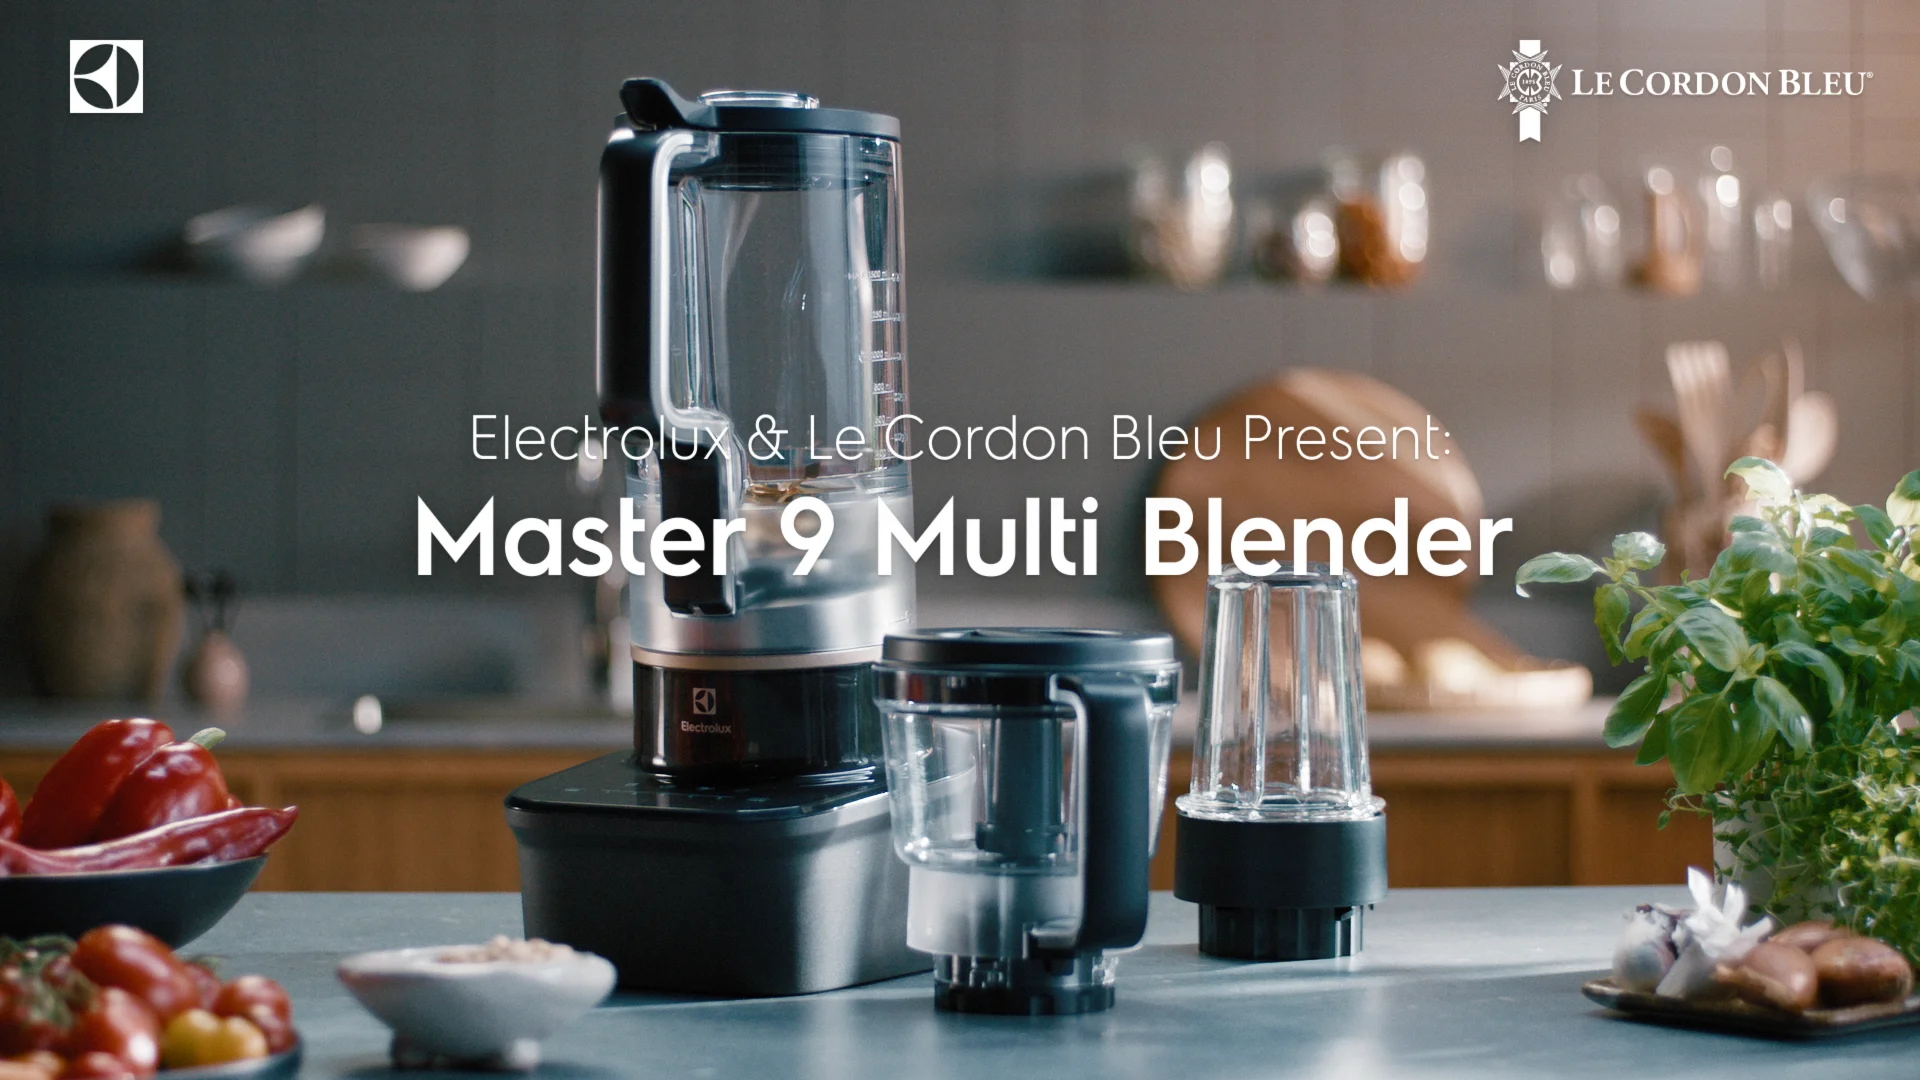 Electrolux Master 9 Multi Blender on Vimeo